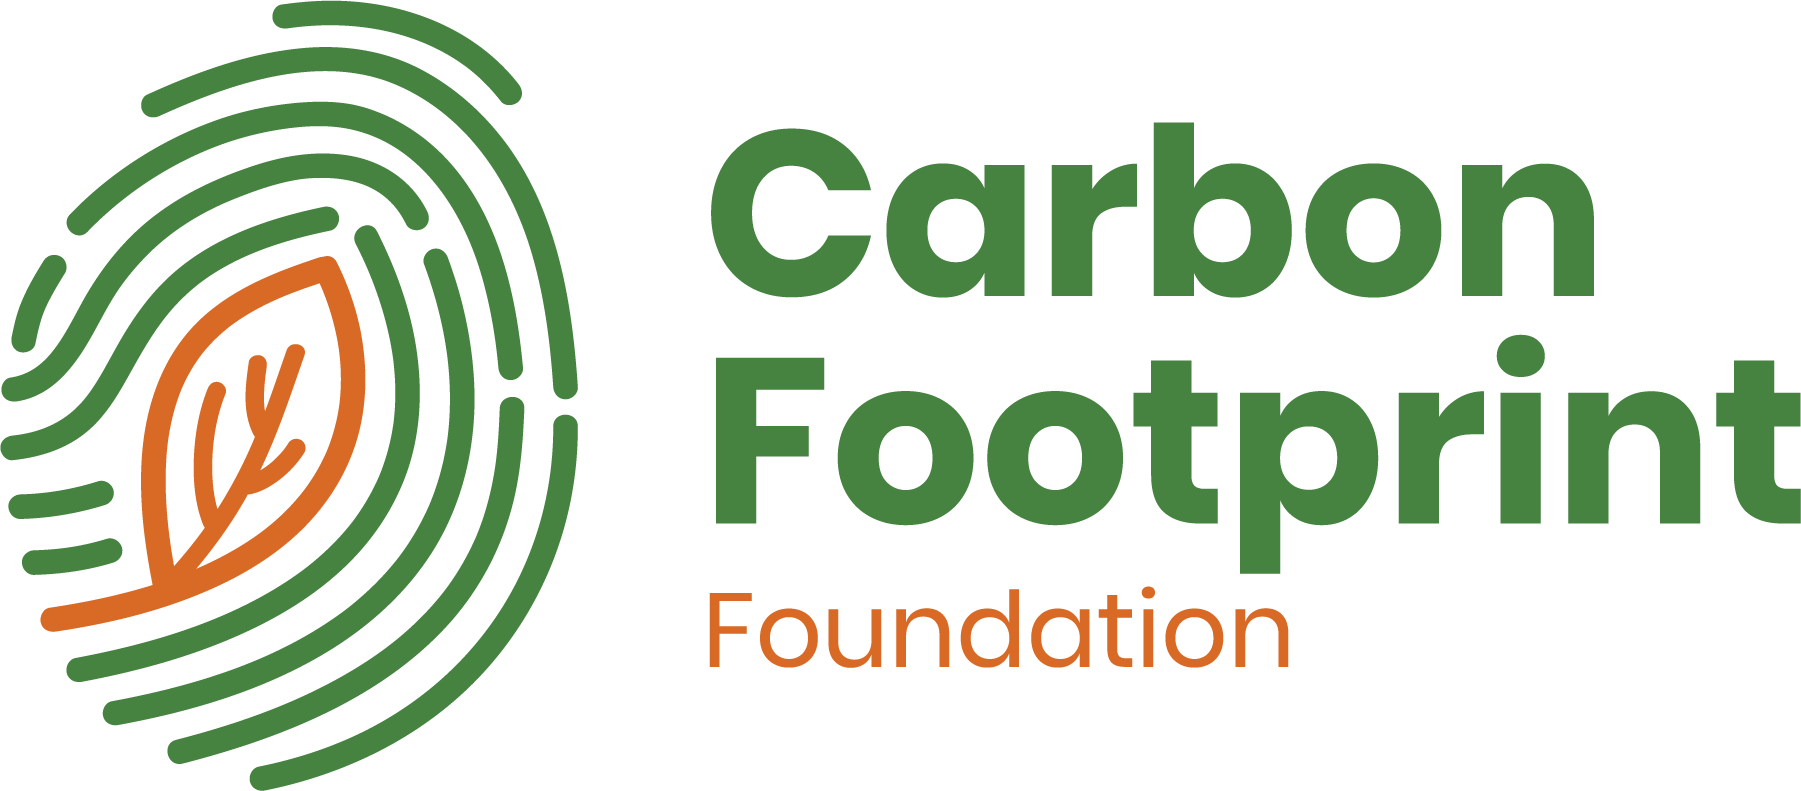 carbon footprint foundation